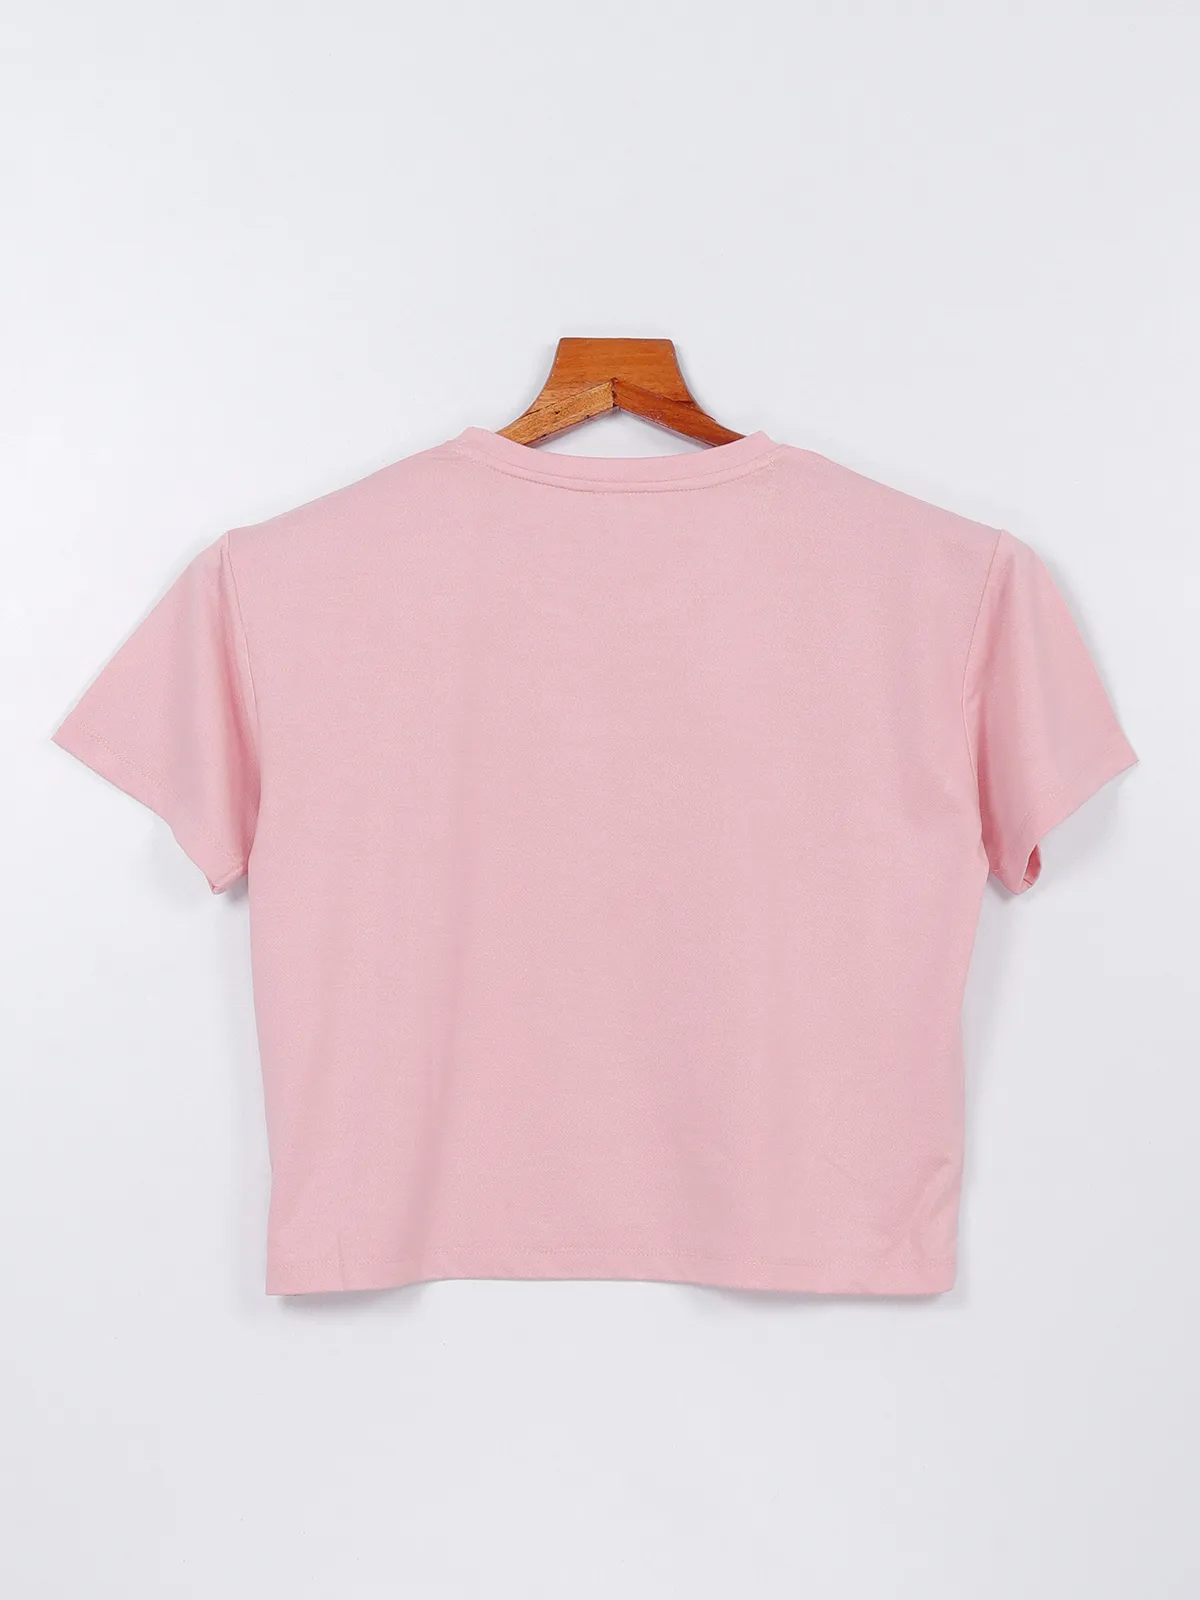 Crimsoune Club pink cotton printed t shirt